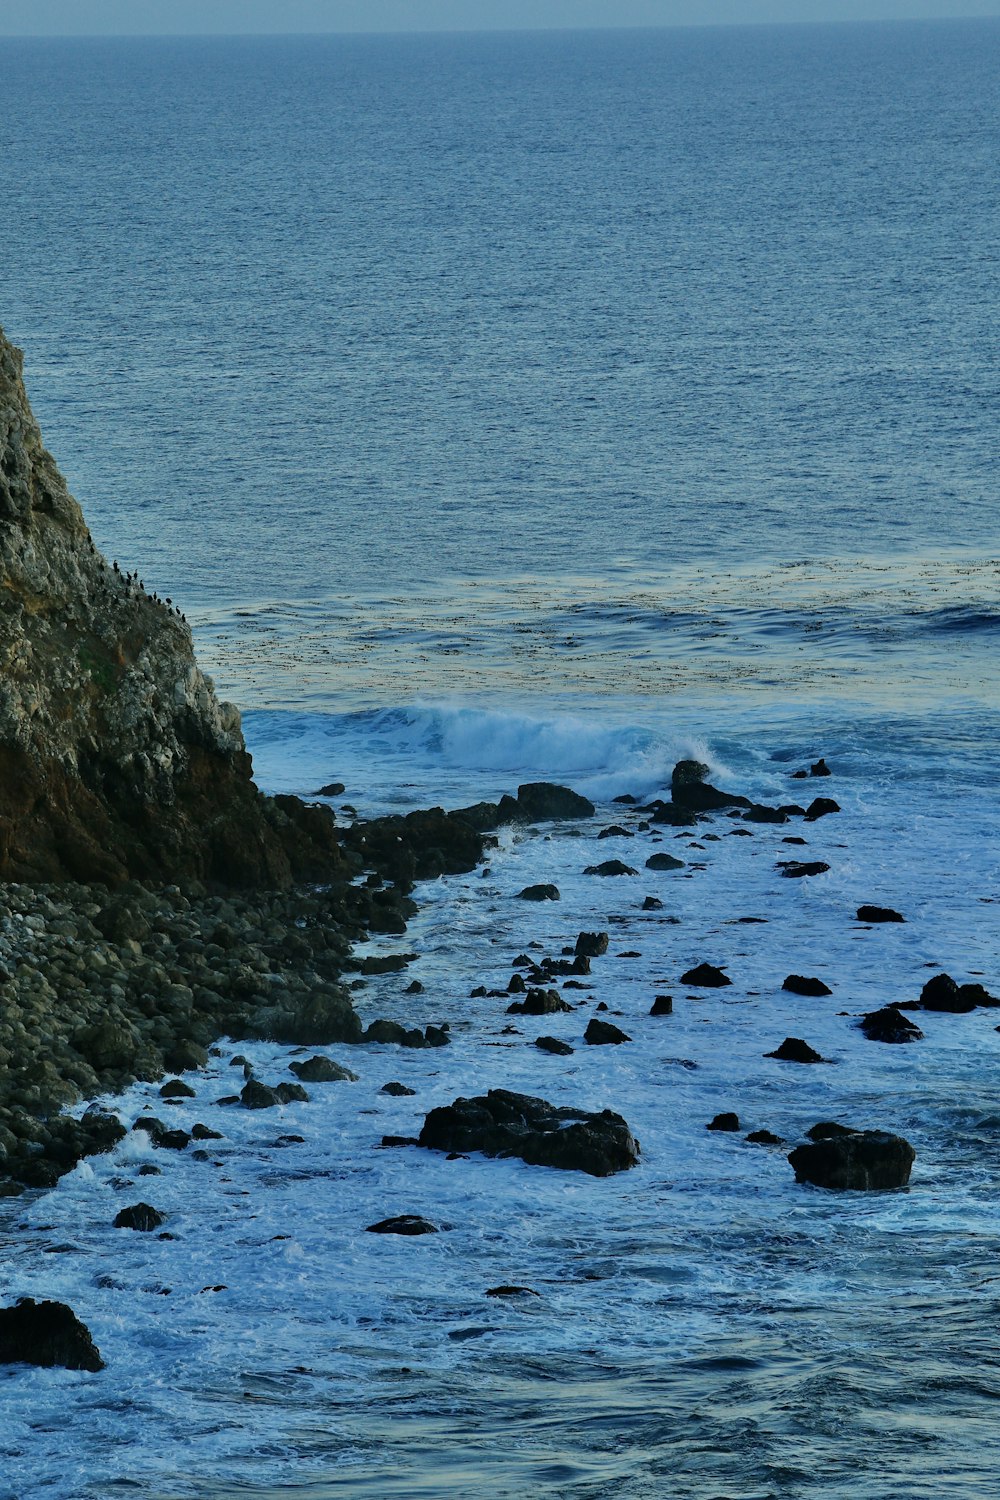 a person walking along a rocky beach next to the ocean